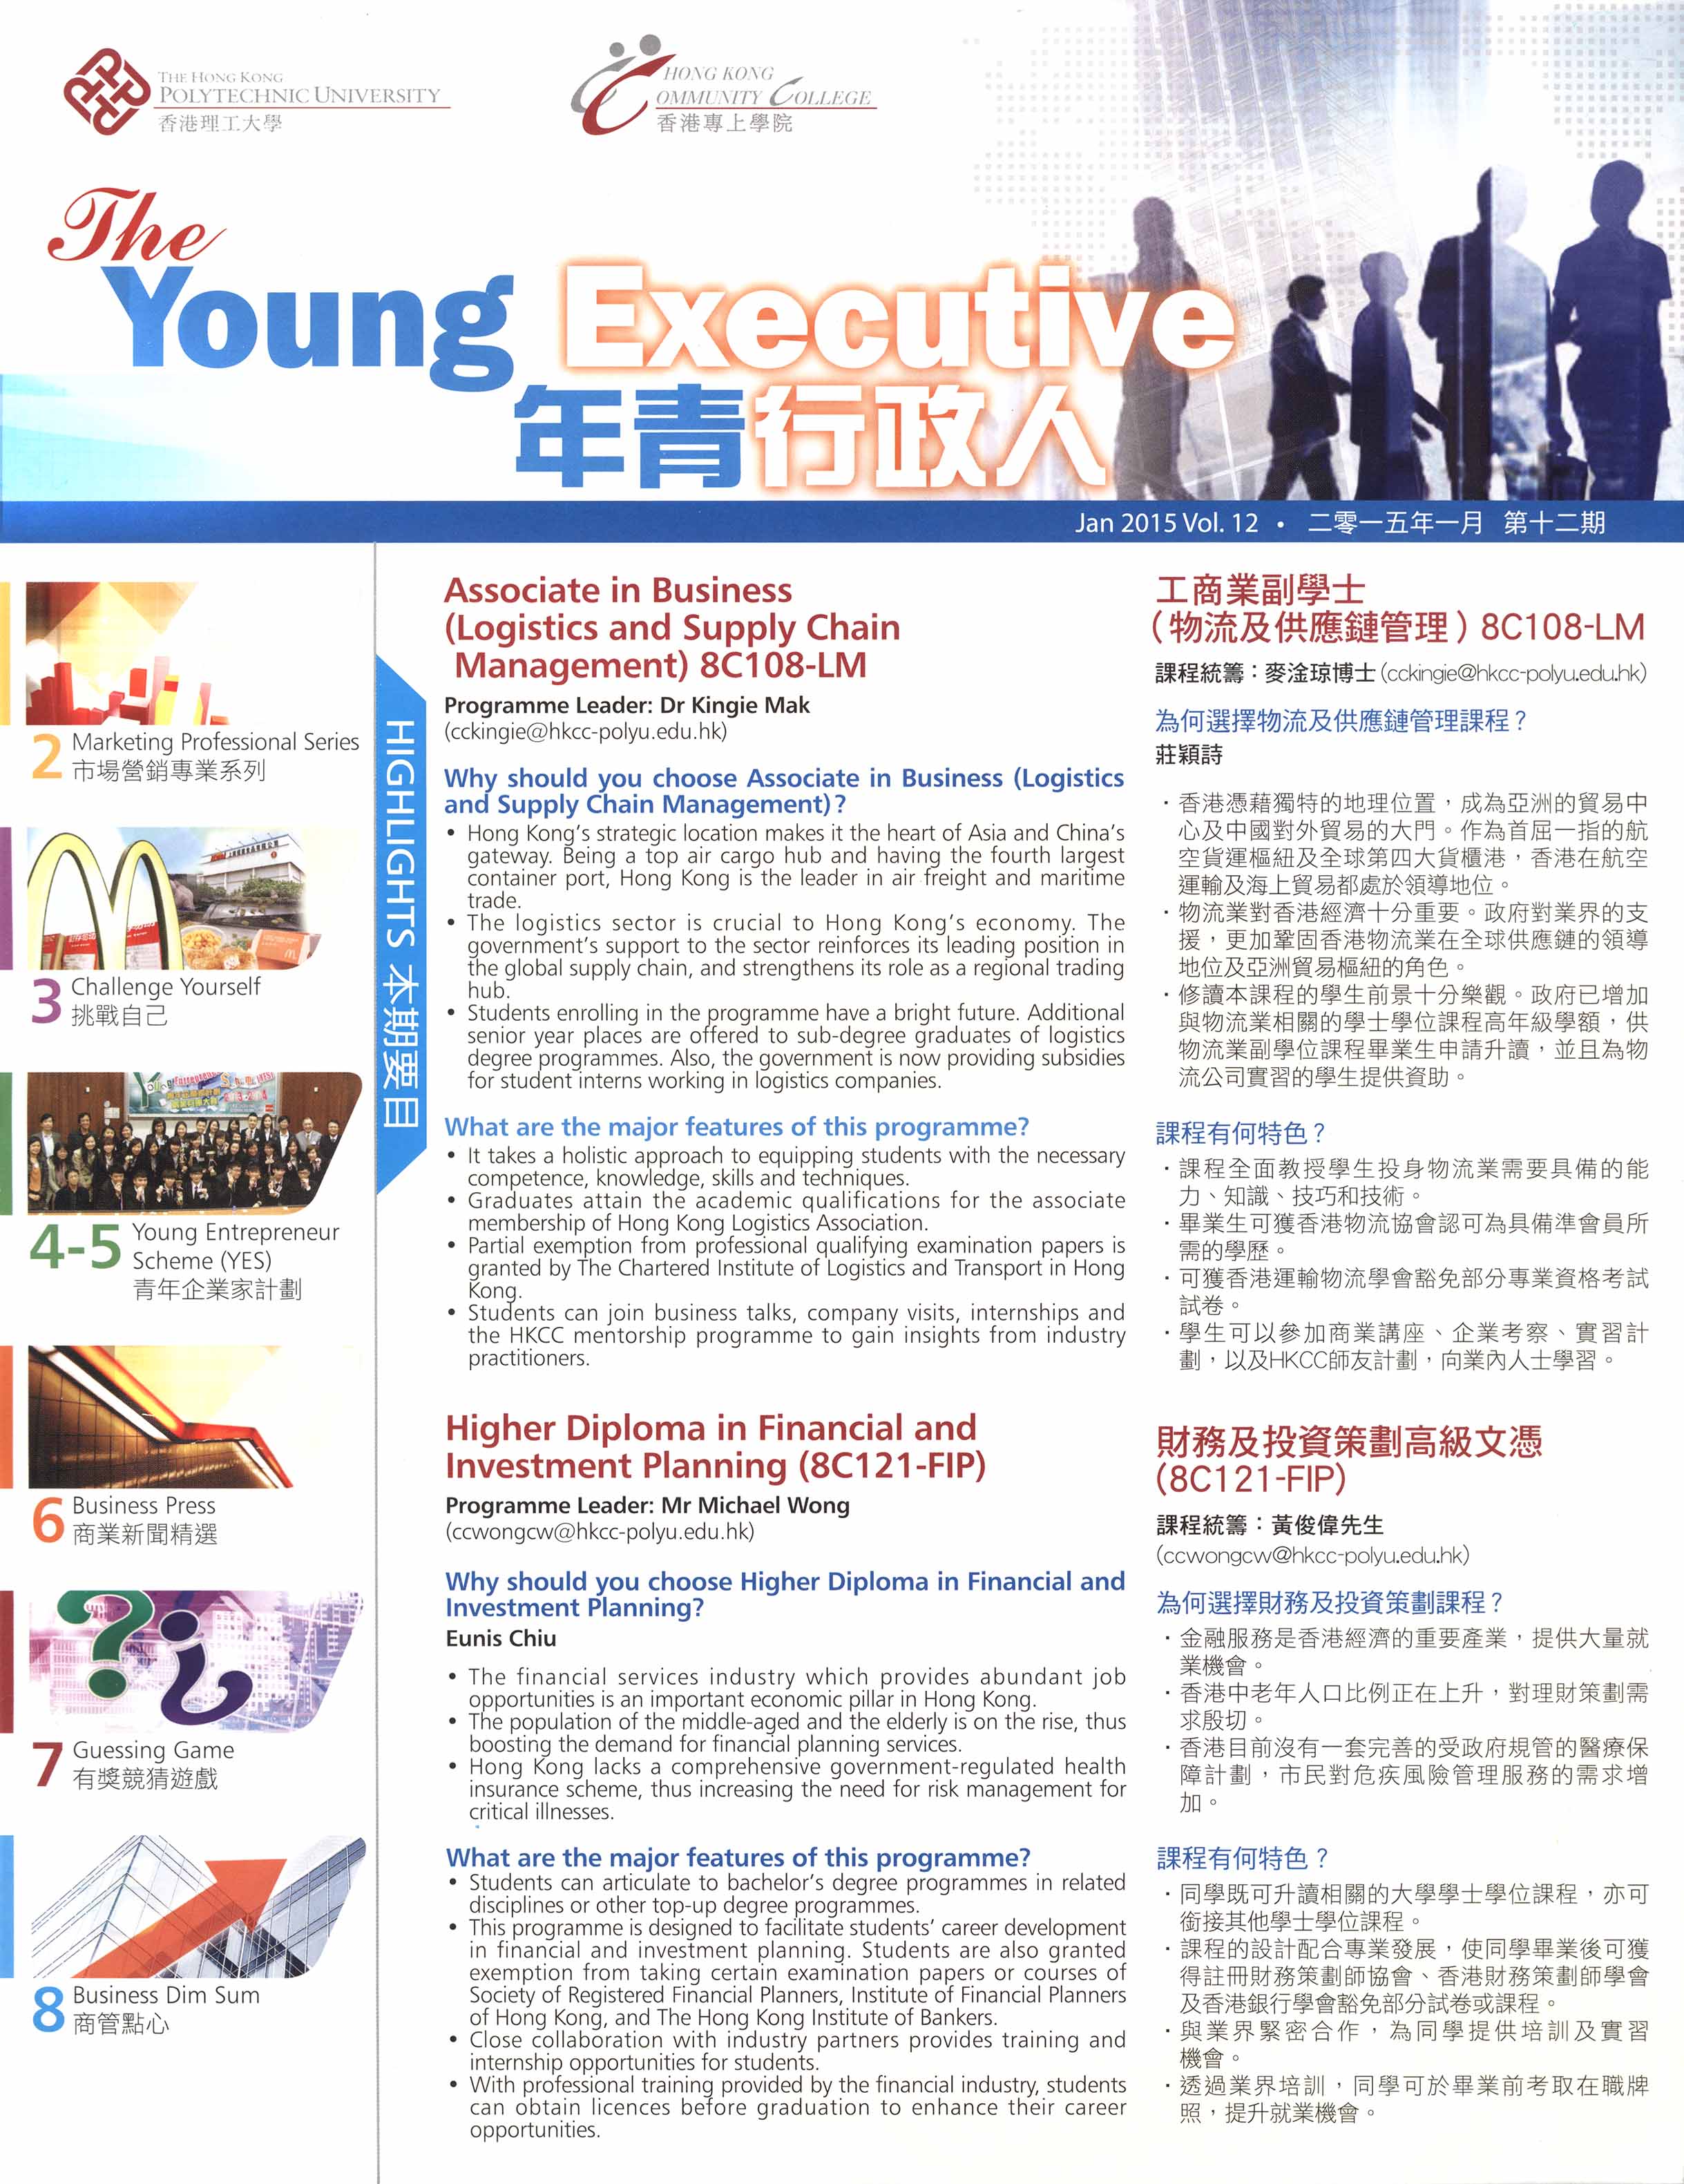 The Young executive. Vol. 12